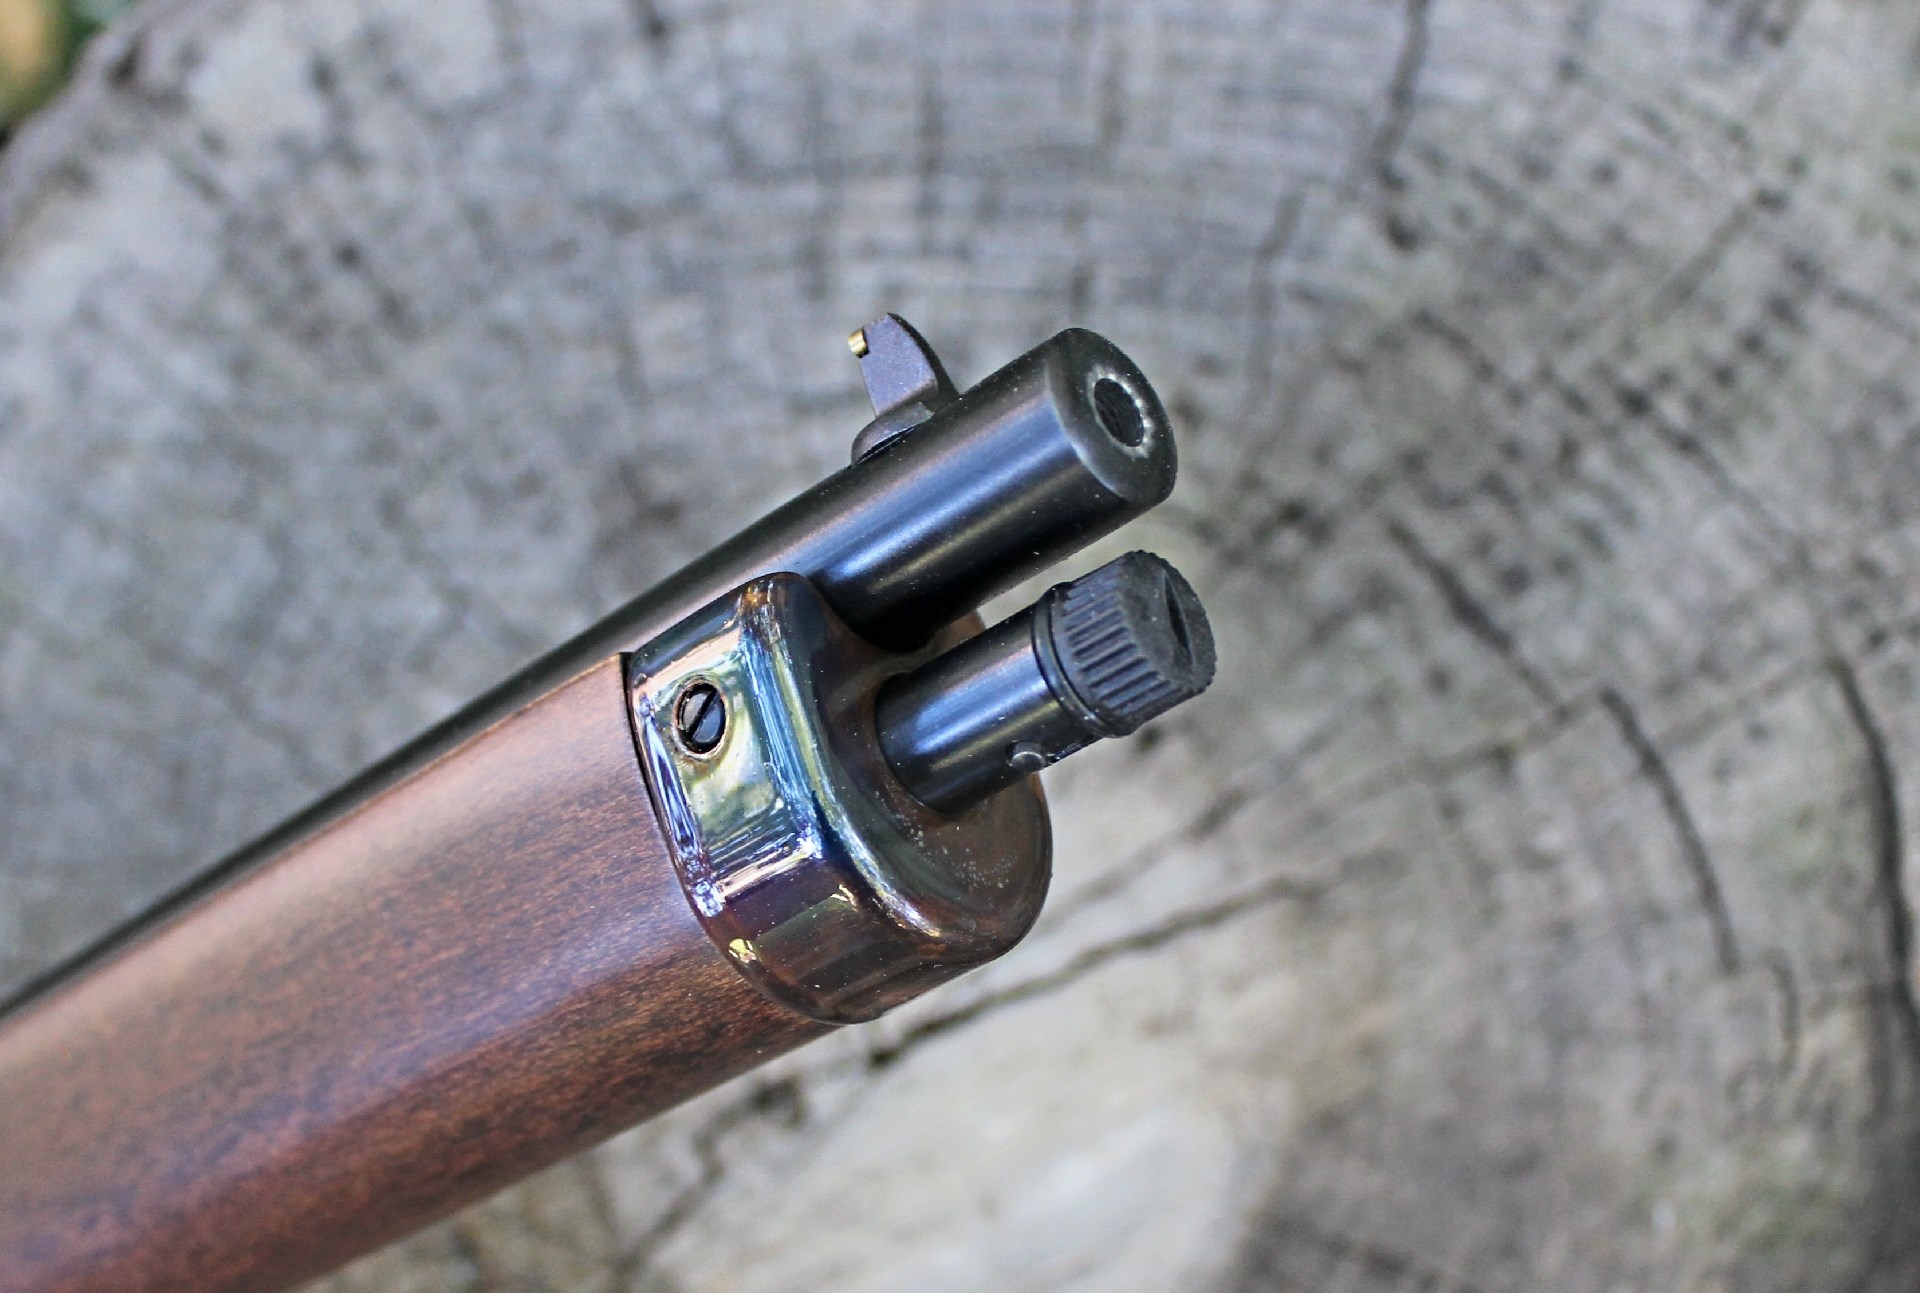 Muzzle of the Heritage Settler Mare's Leg pistol.